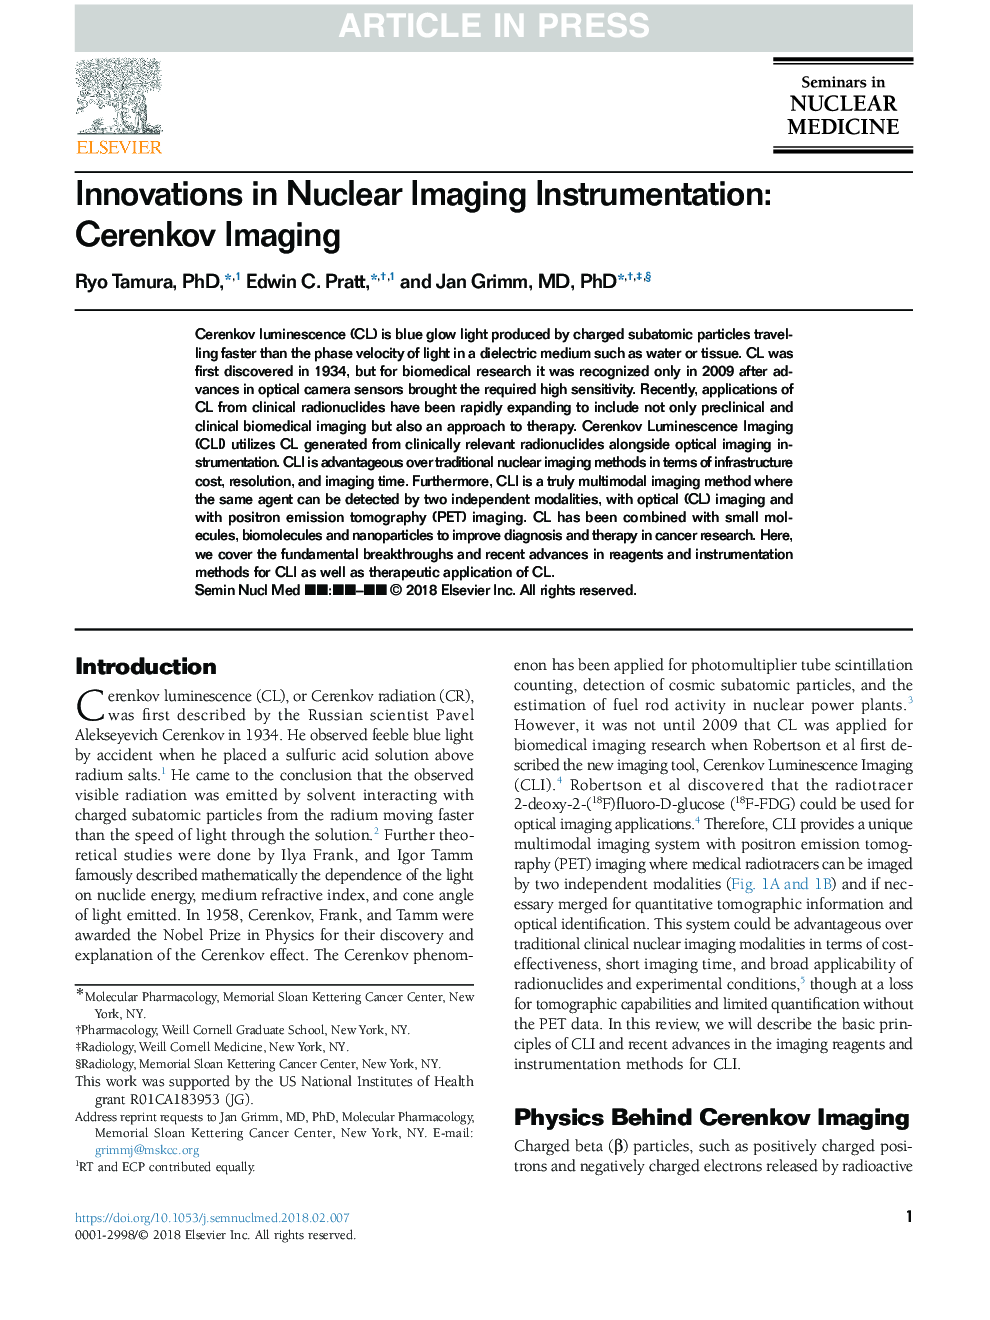 Innovations in Nuclear Imaging Instrumentation: Cerenkov Imaging